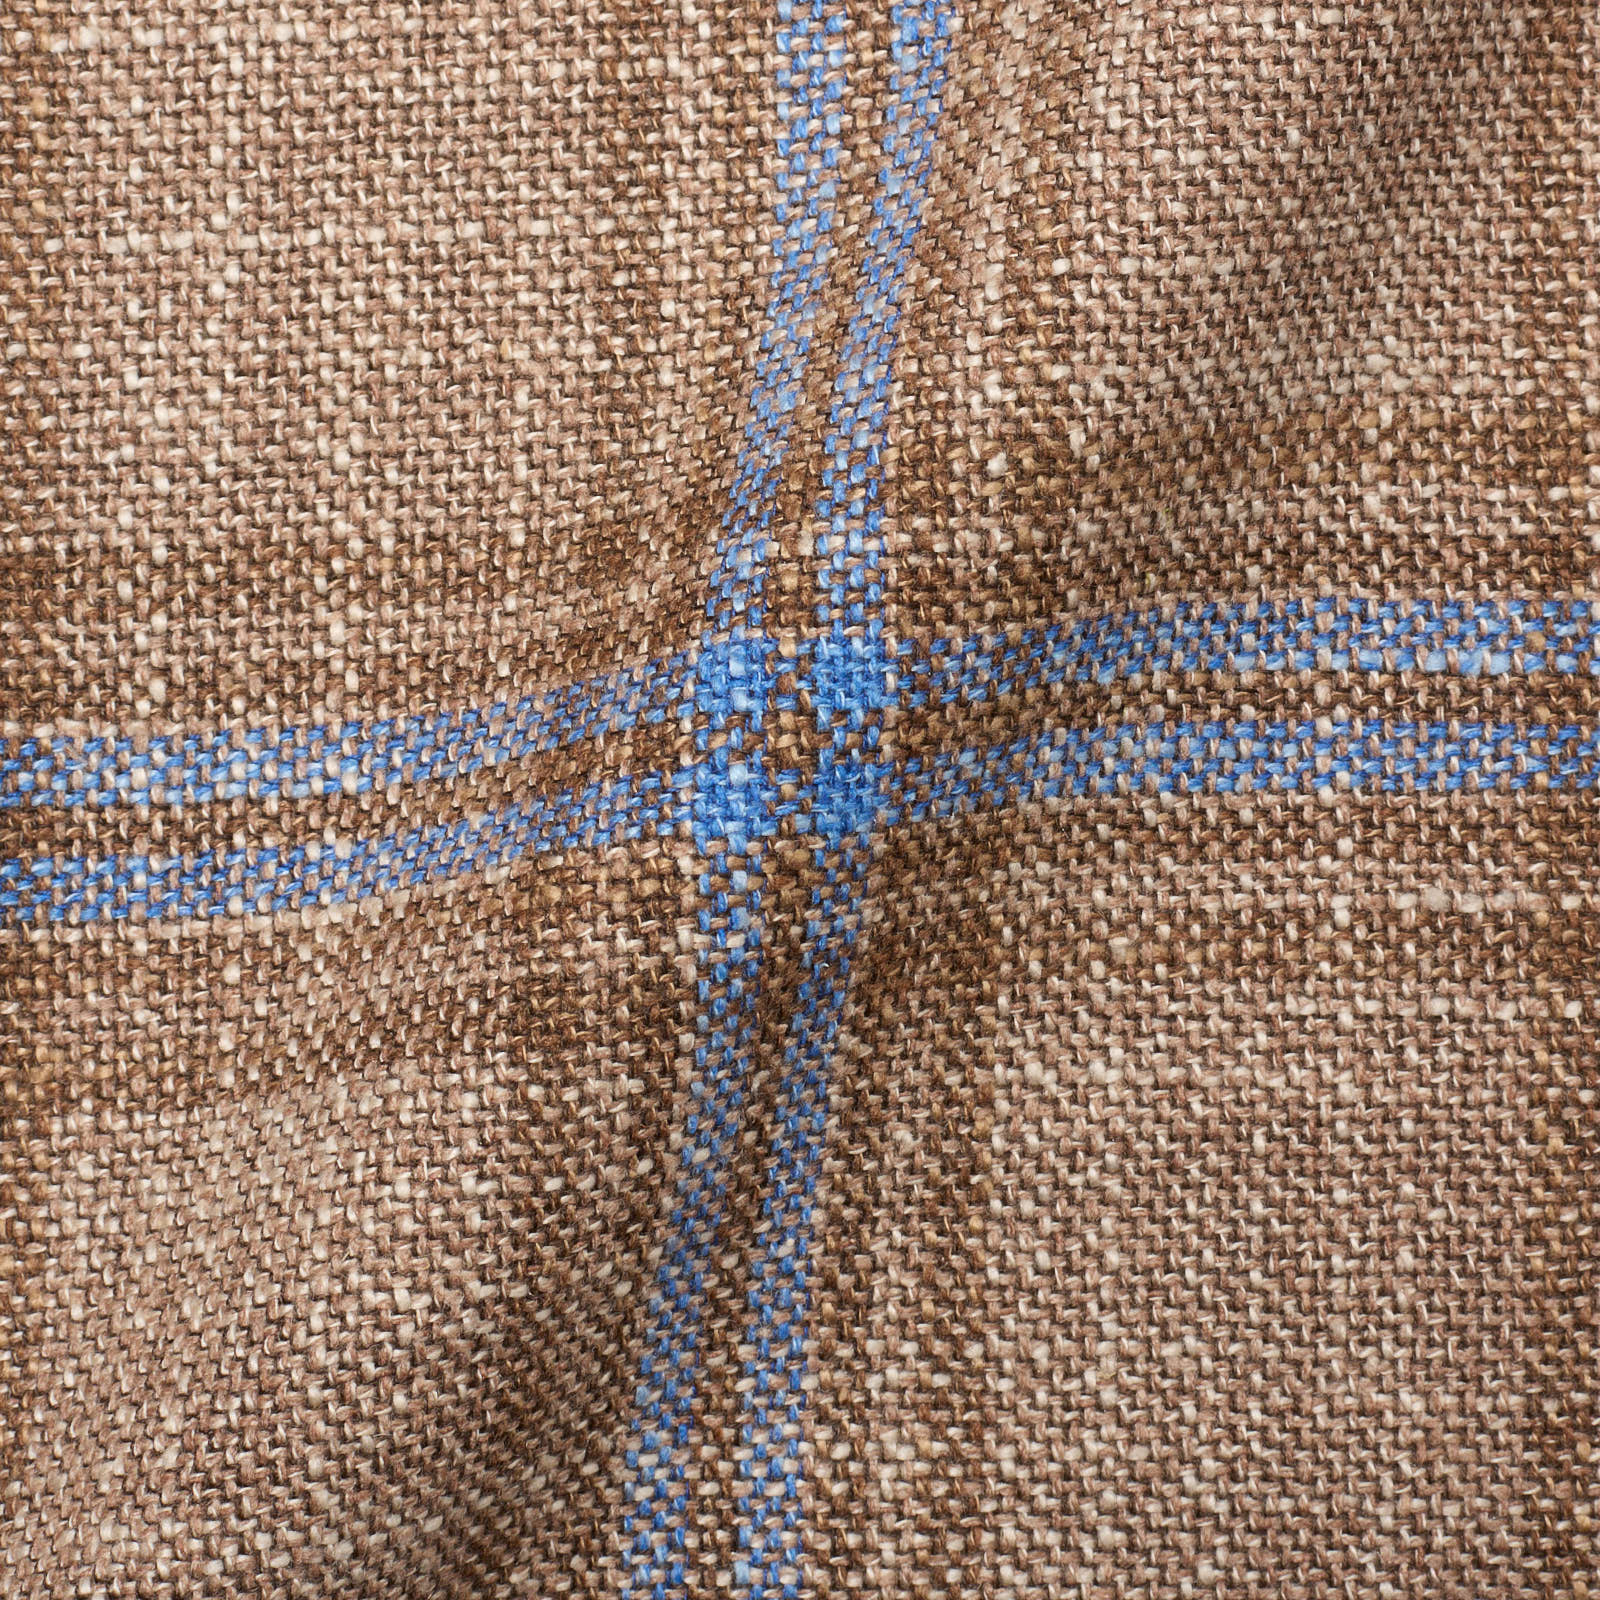 SARTORIA PARTENOPEA Beige-Blue Plaid Wool-Silk Jacket NEW Current Model